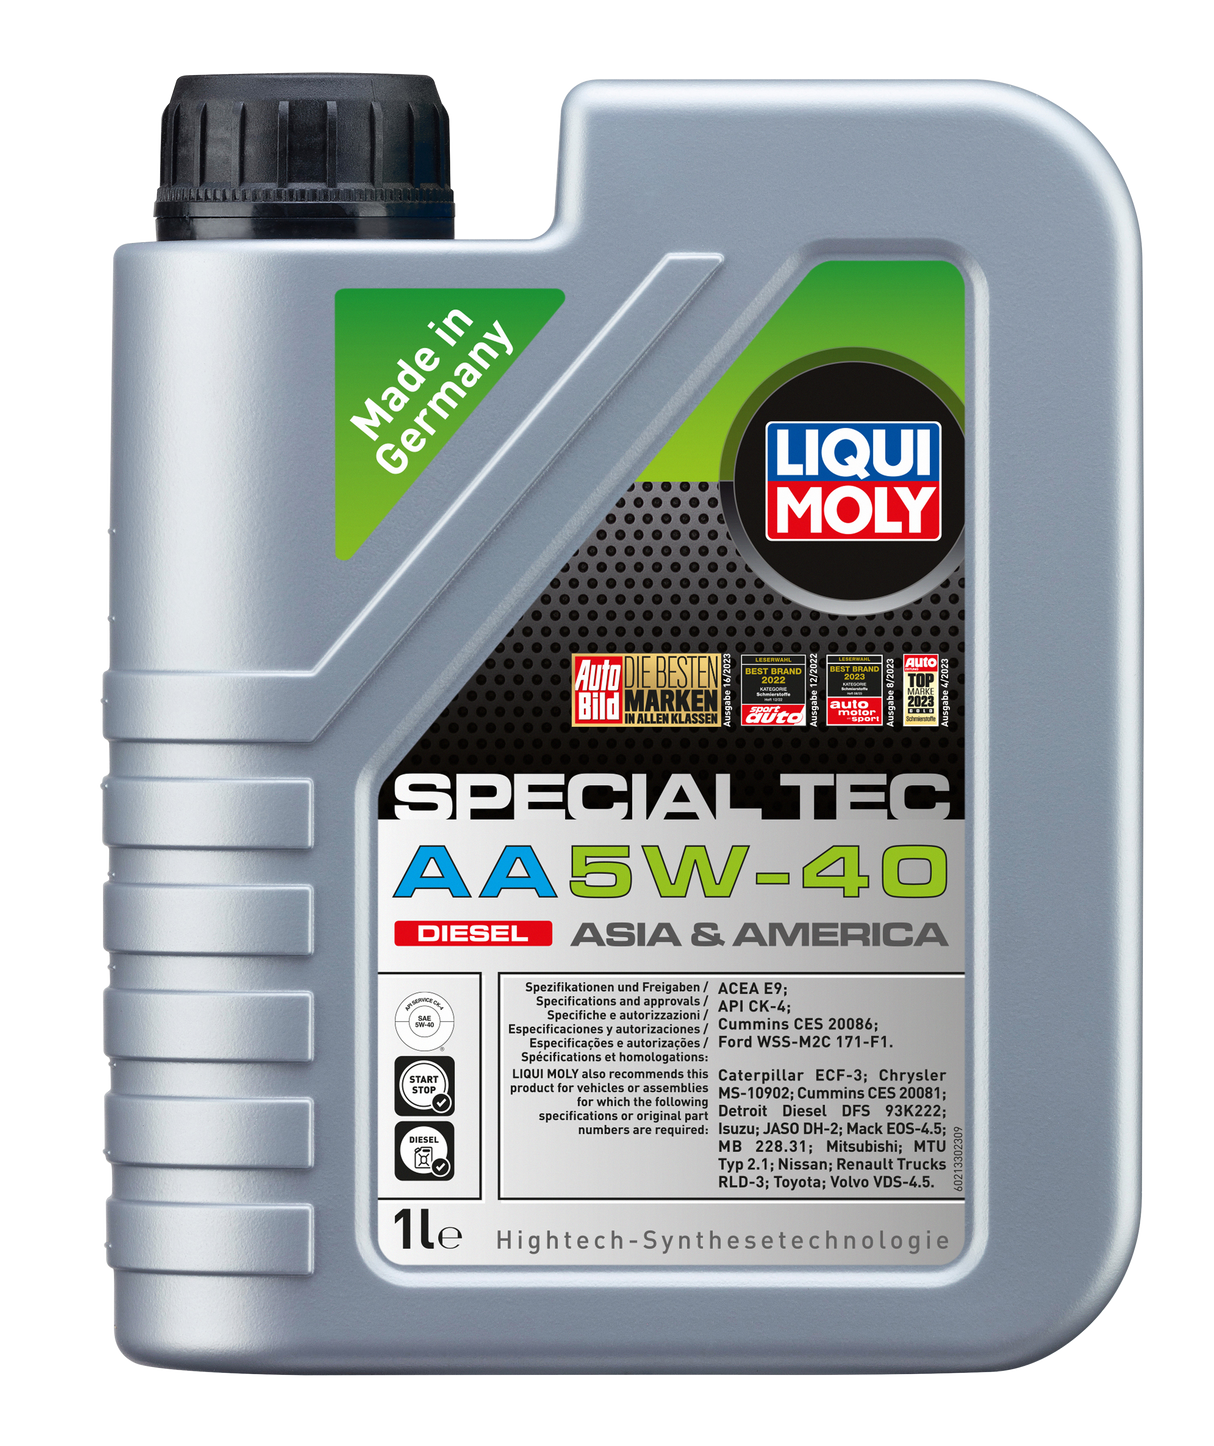 Liqui Moly Special Tec AA 5W-40 Diesel